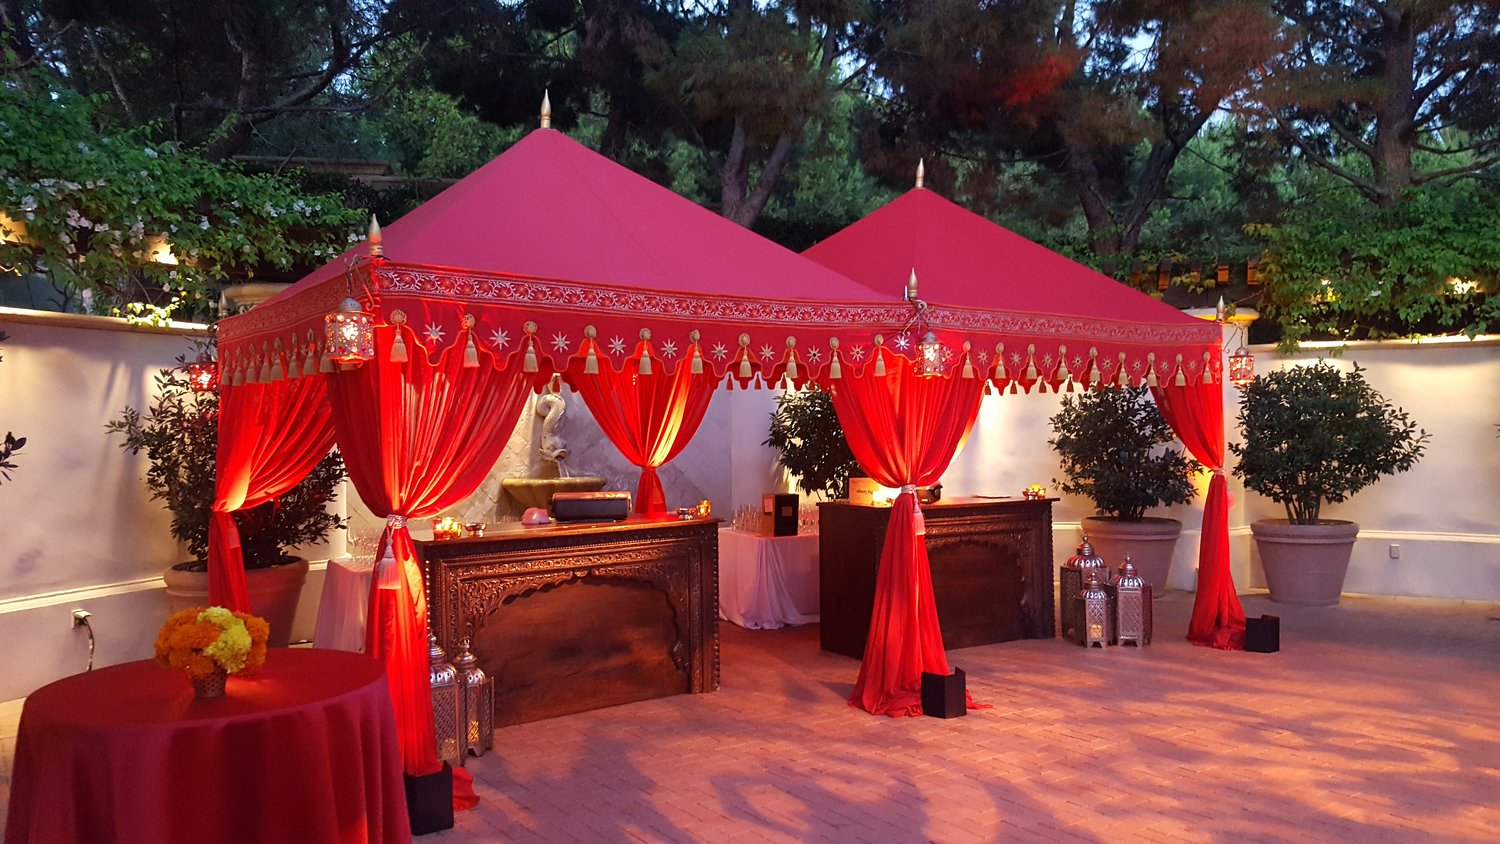 Raj Tents Luxury Tent Rentals Los Angeles